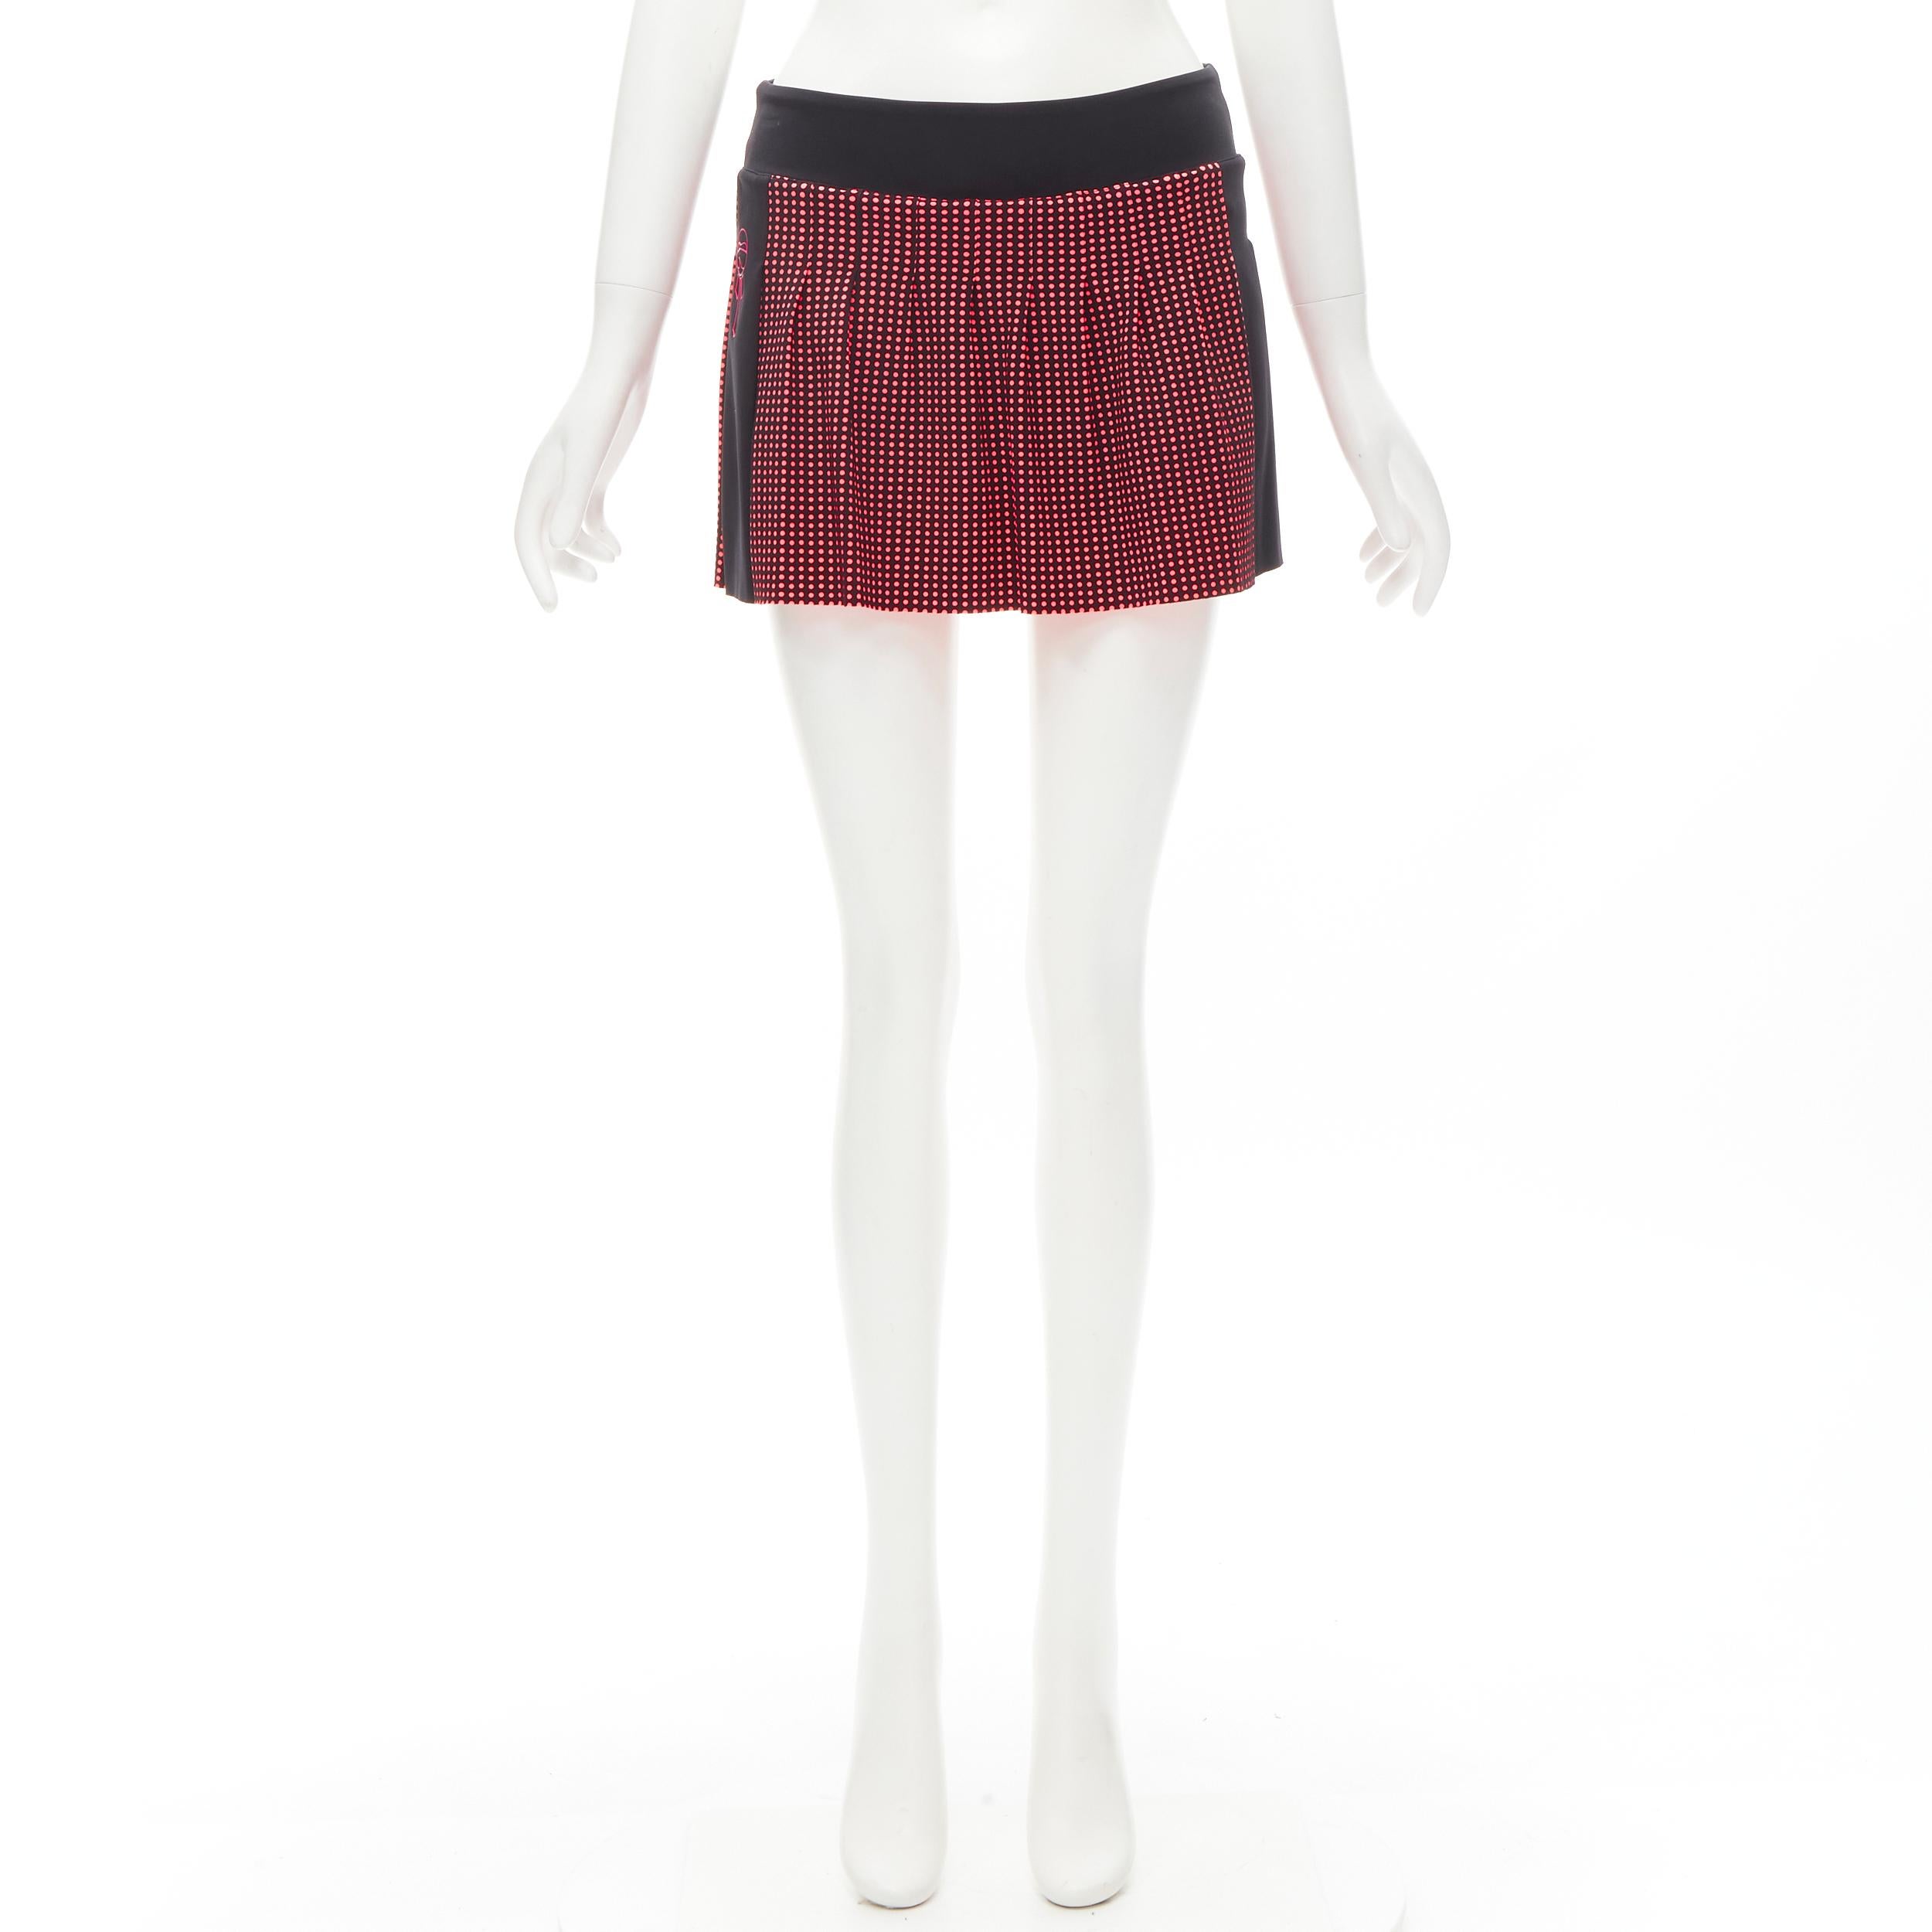 FENDI Activewear Karl Love black pink polka dot lined pleated skirt S For Sale 2